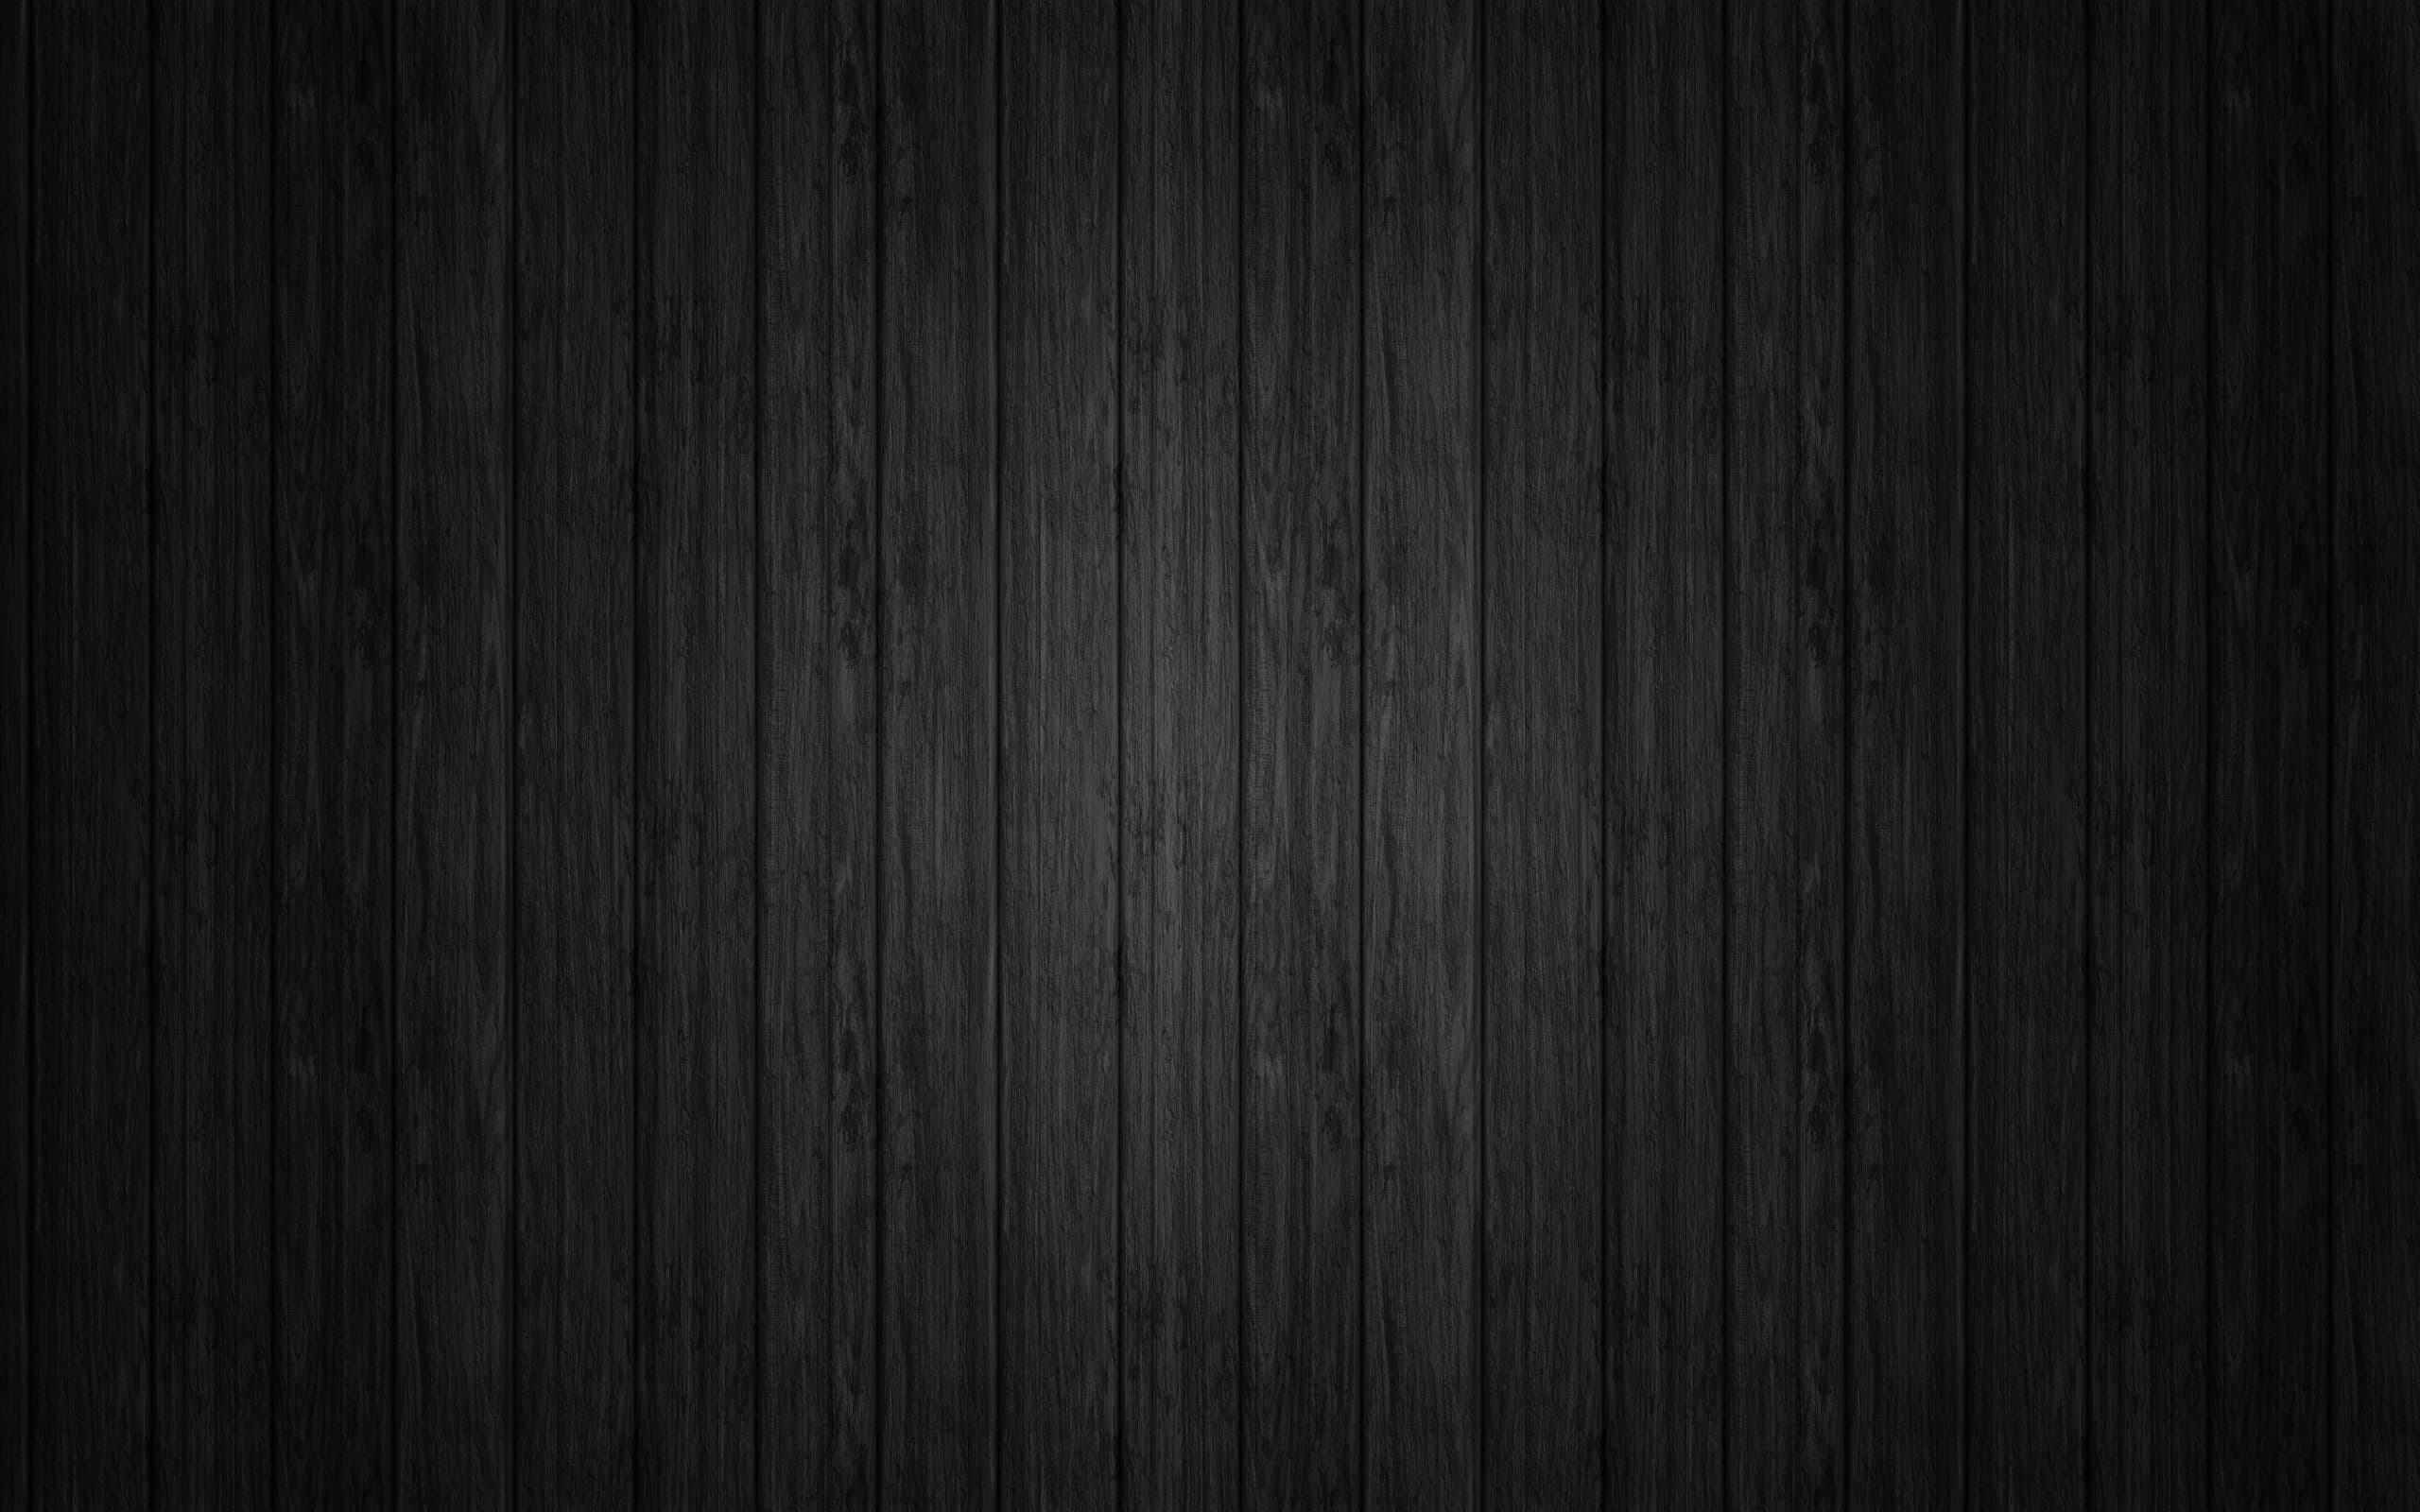 Board Black Series Texture Background Wood Wallpaper Wood Texture